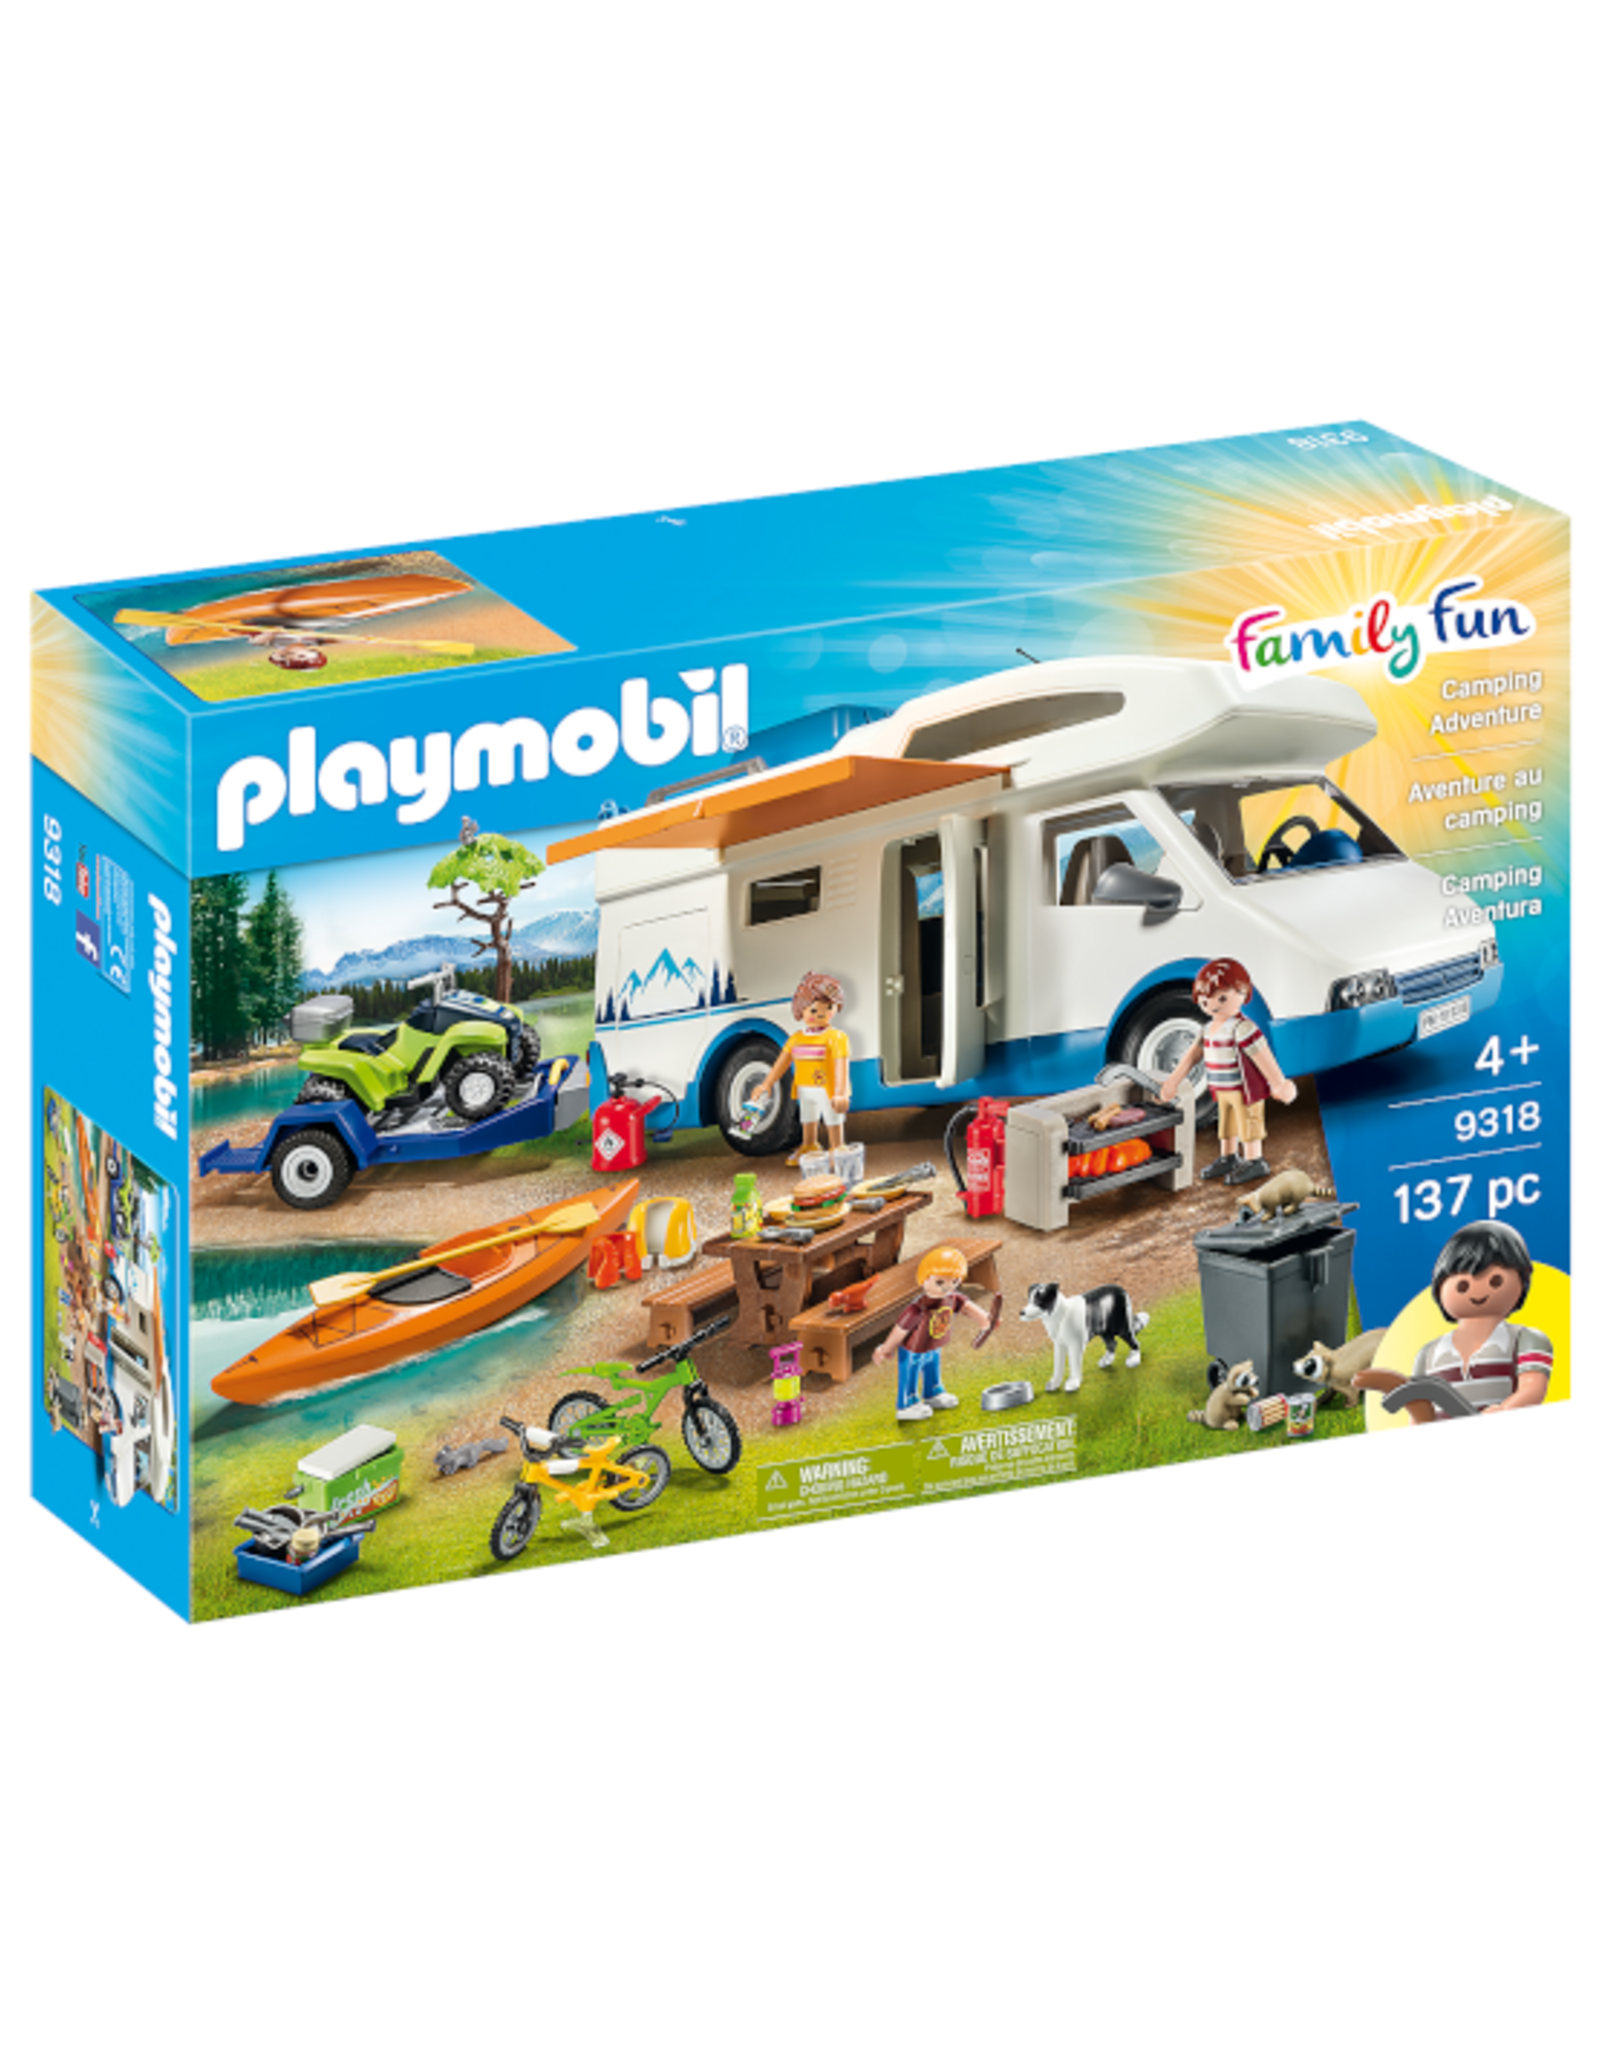 Playmobil Playmobil - Family Fun - 9318 - Camping Adventure